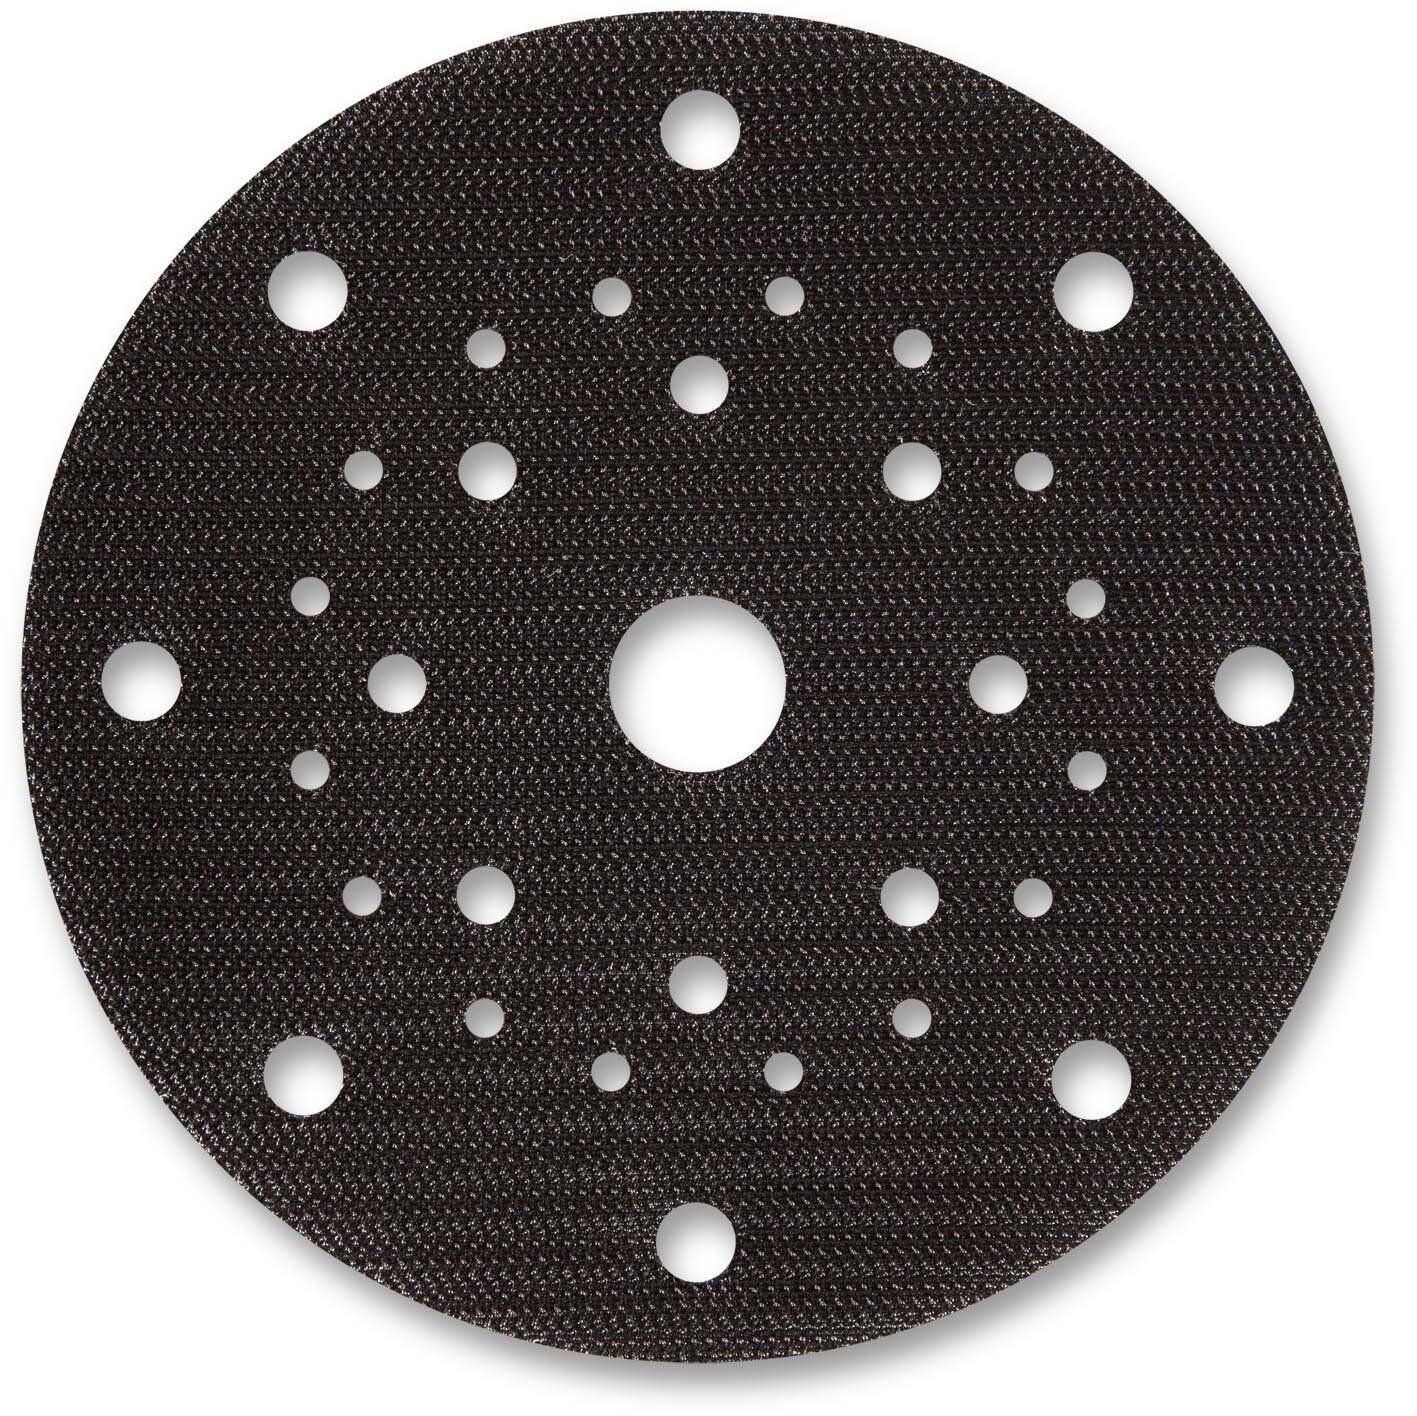 siapad intermediate disc Ø147mm 33 hole (2 pieces)